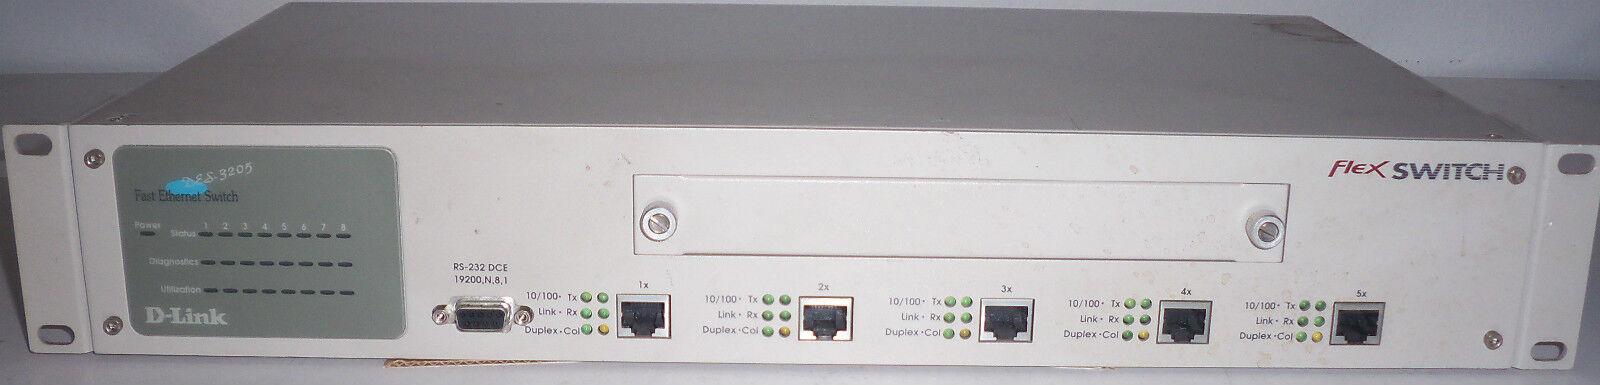 D-LInk Flex Switch Fast Ethernet Switch Des-3205 Ver: A1